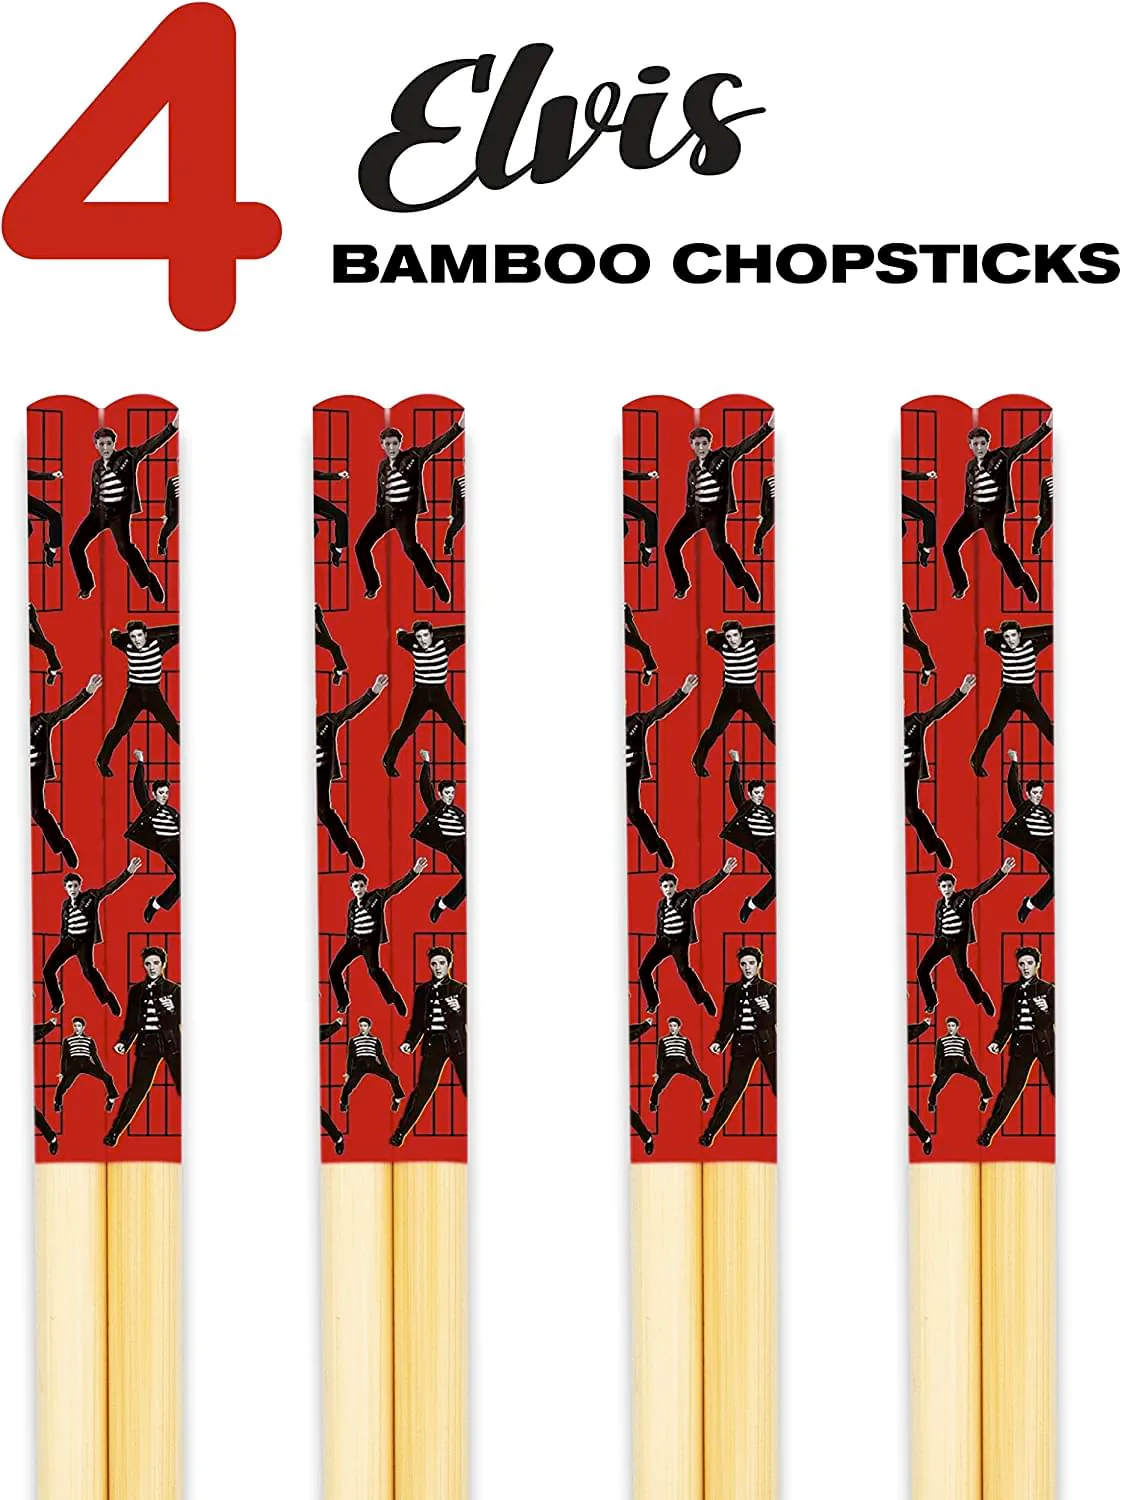 Hashis Elvis Presley Jailhouse Chopsticks